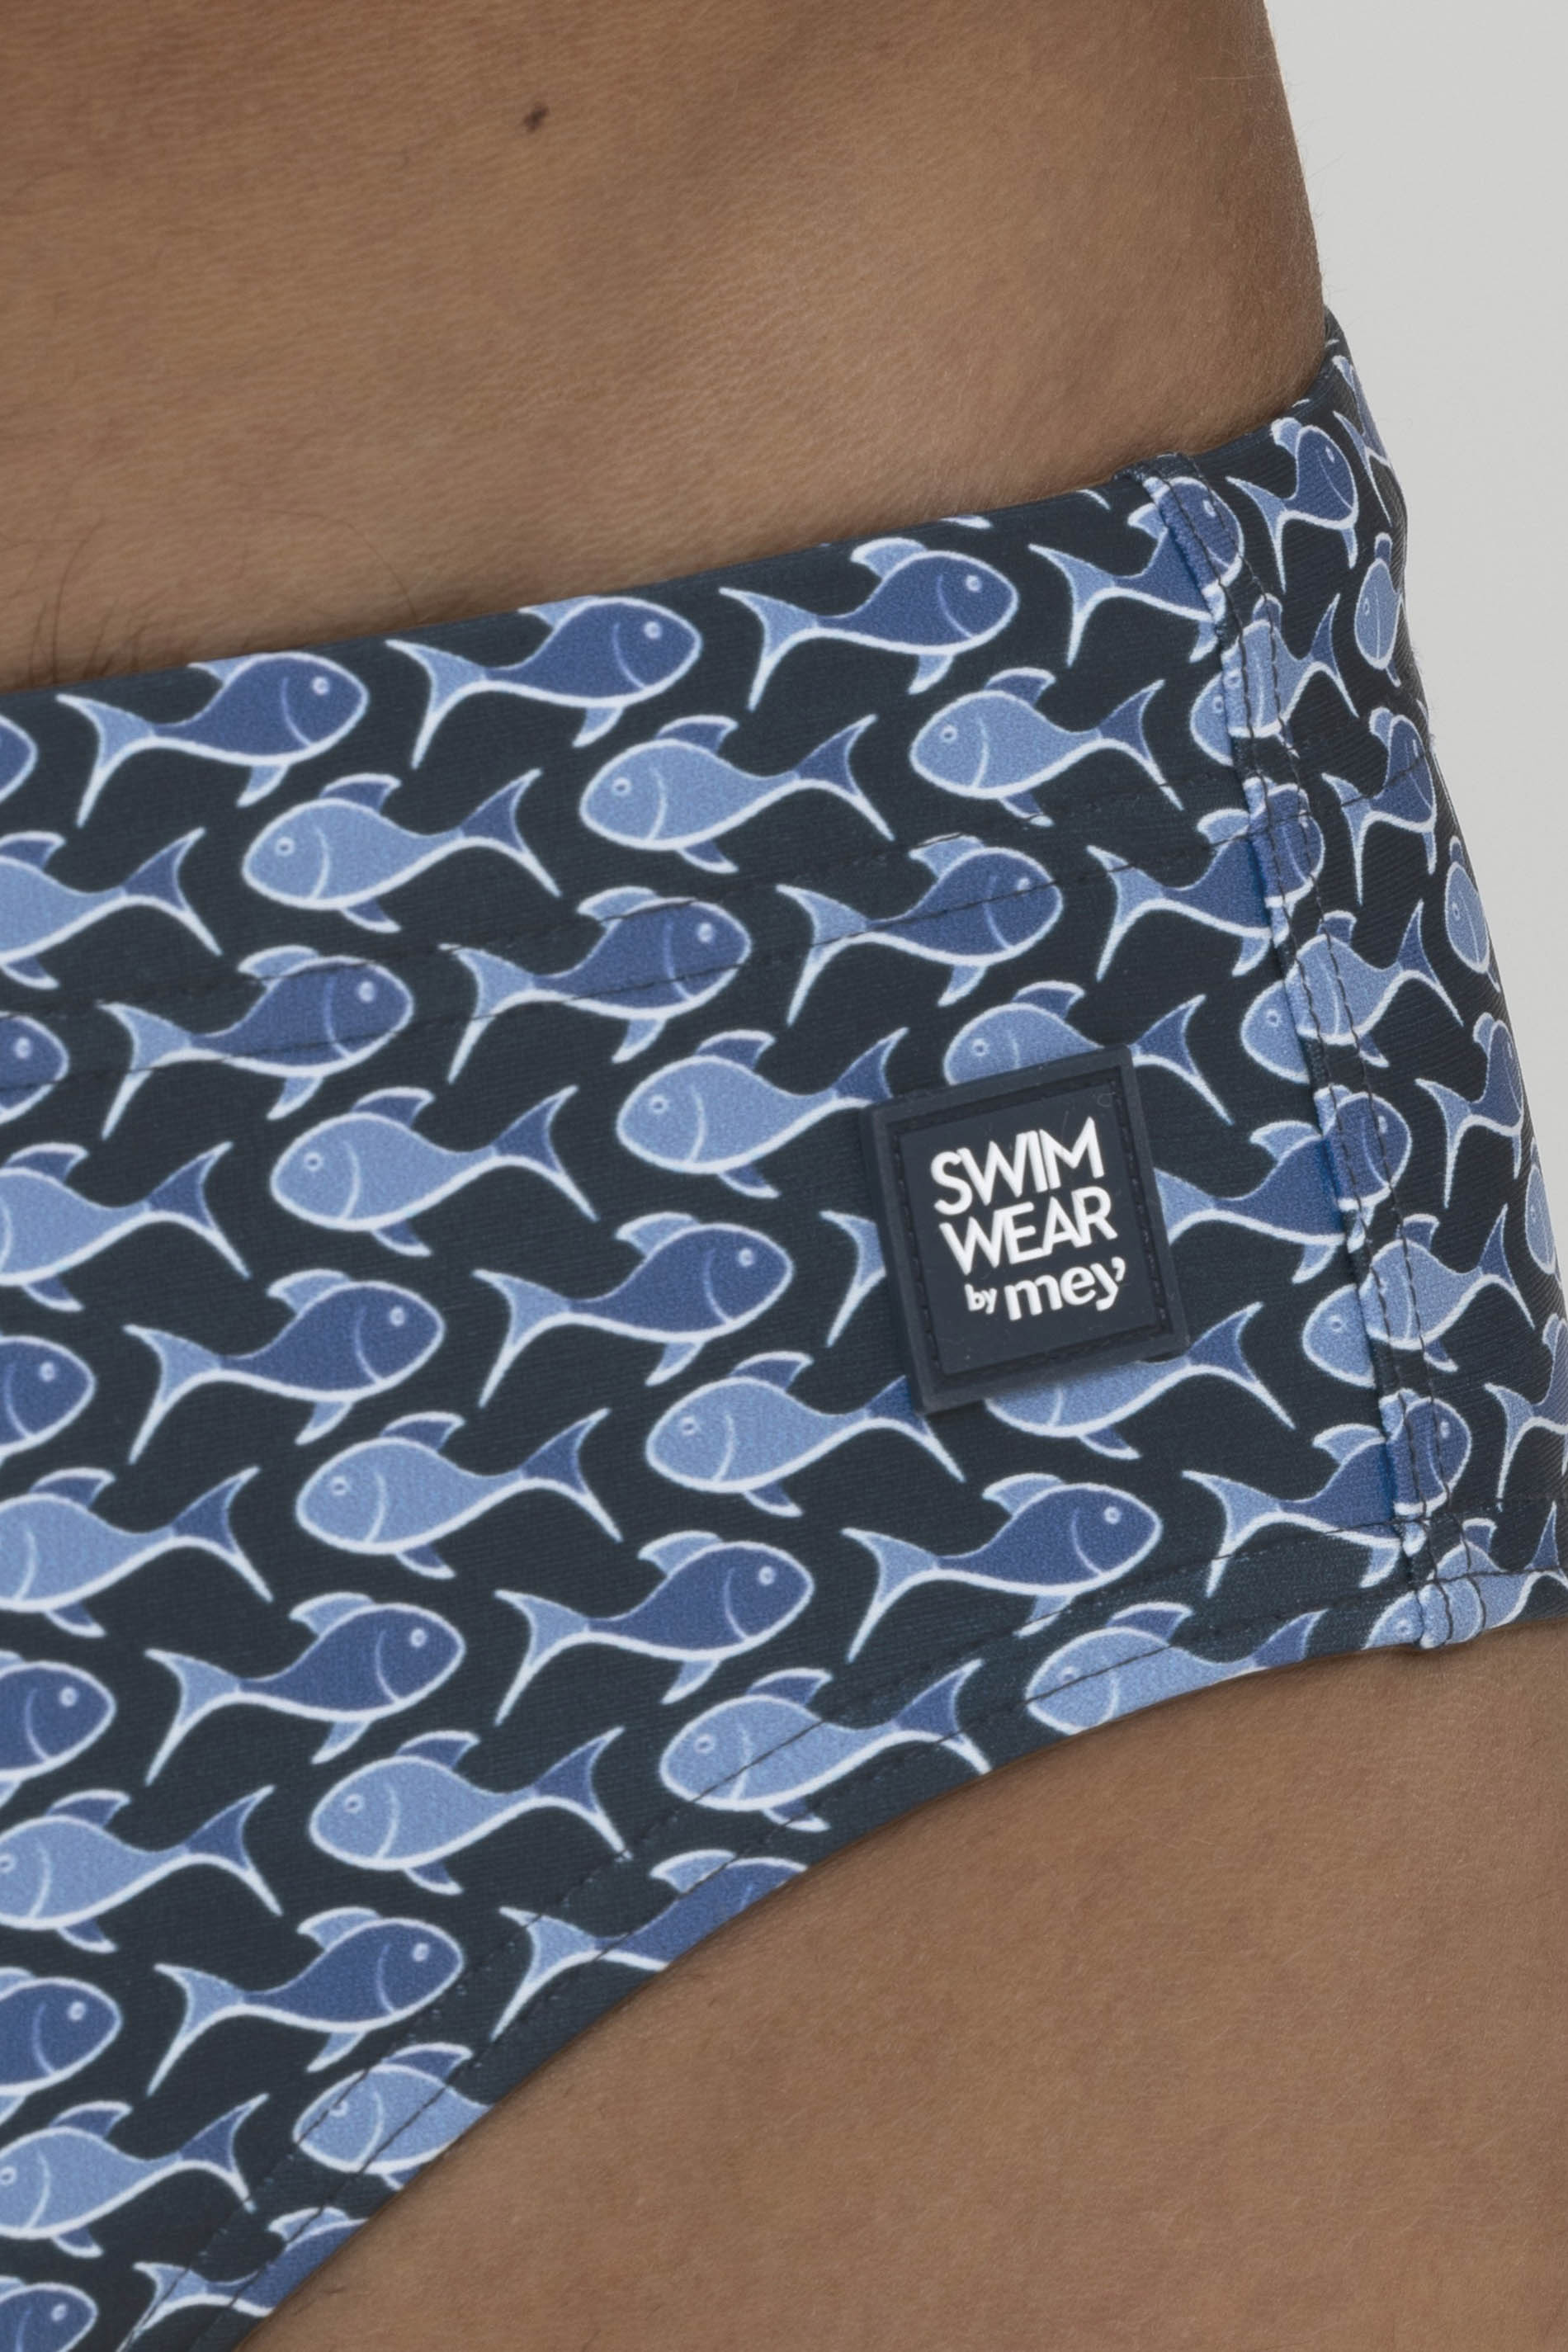 Swim shorts Serie Mini Fish Detail View 01 | mey®